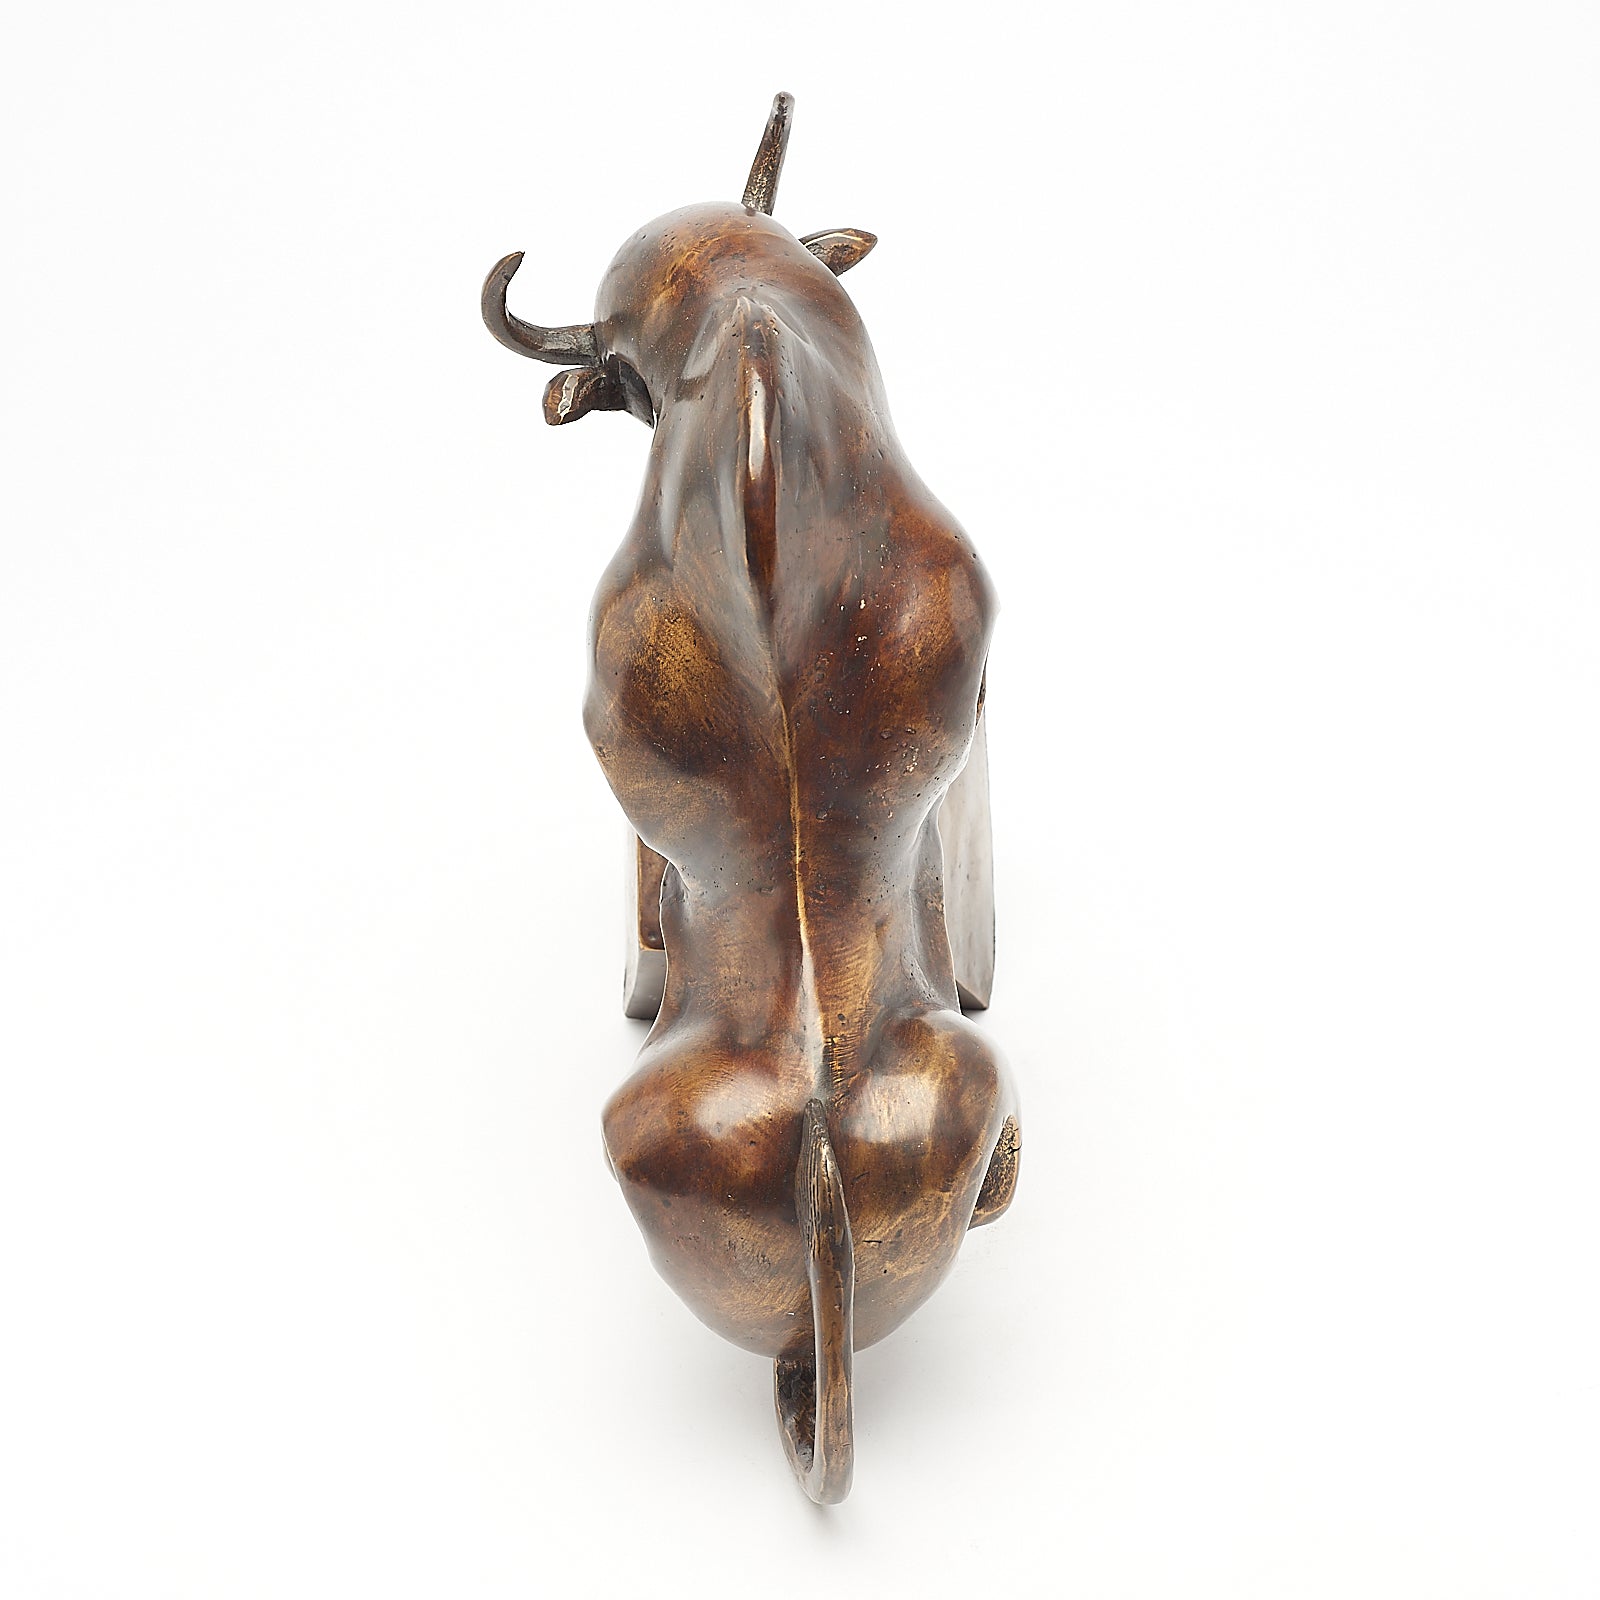 Cubist Bull in brushed bronze